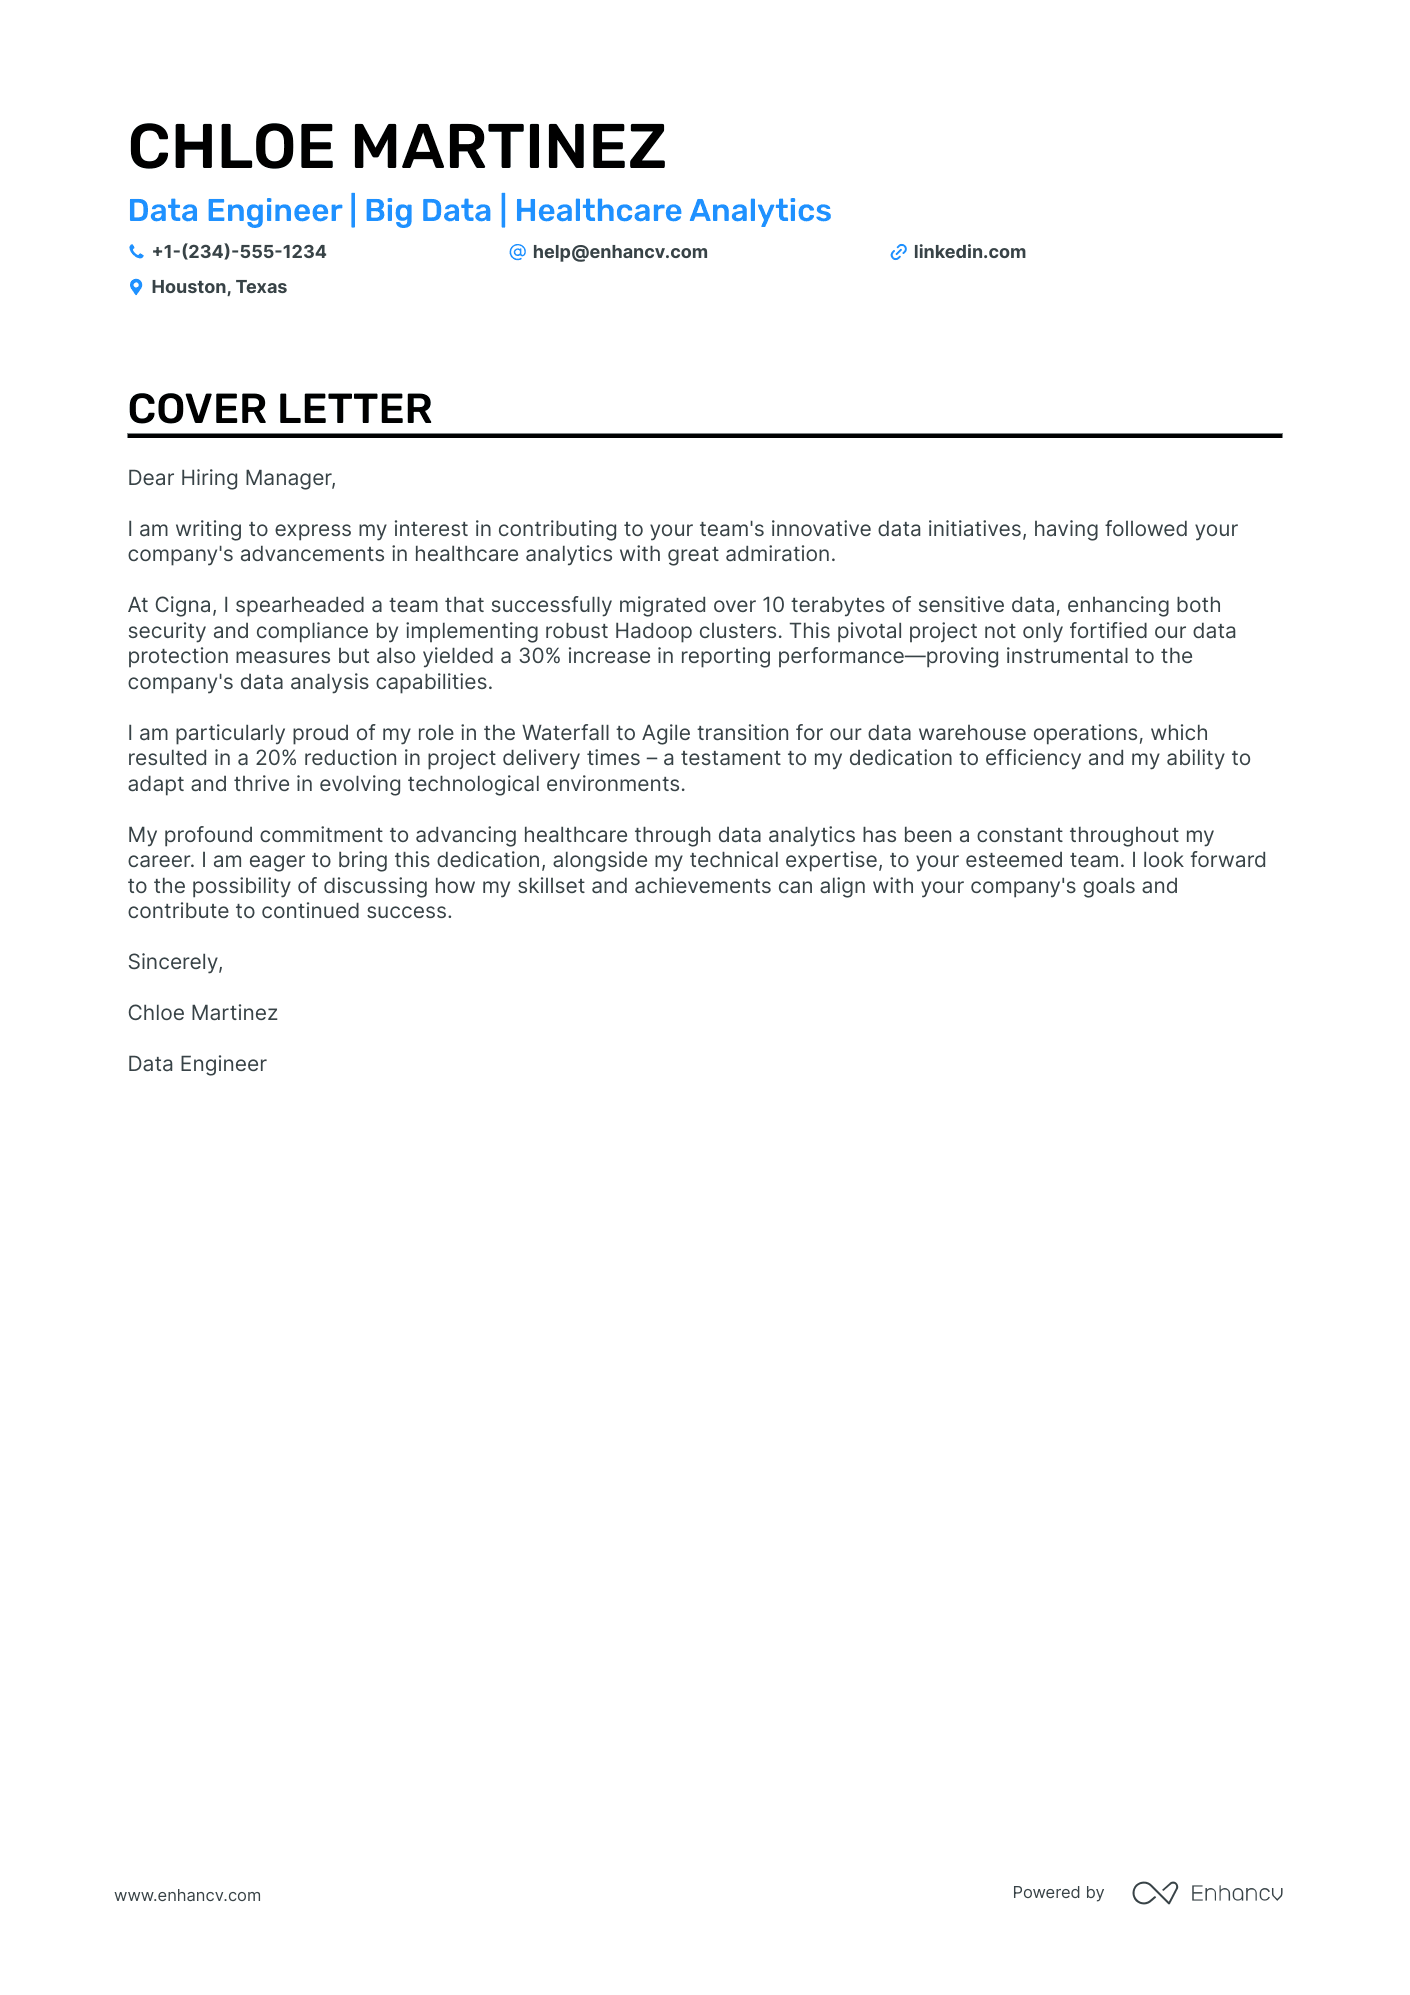 Database Architect cover letter